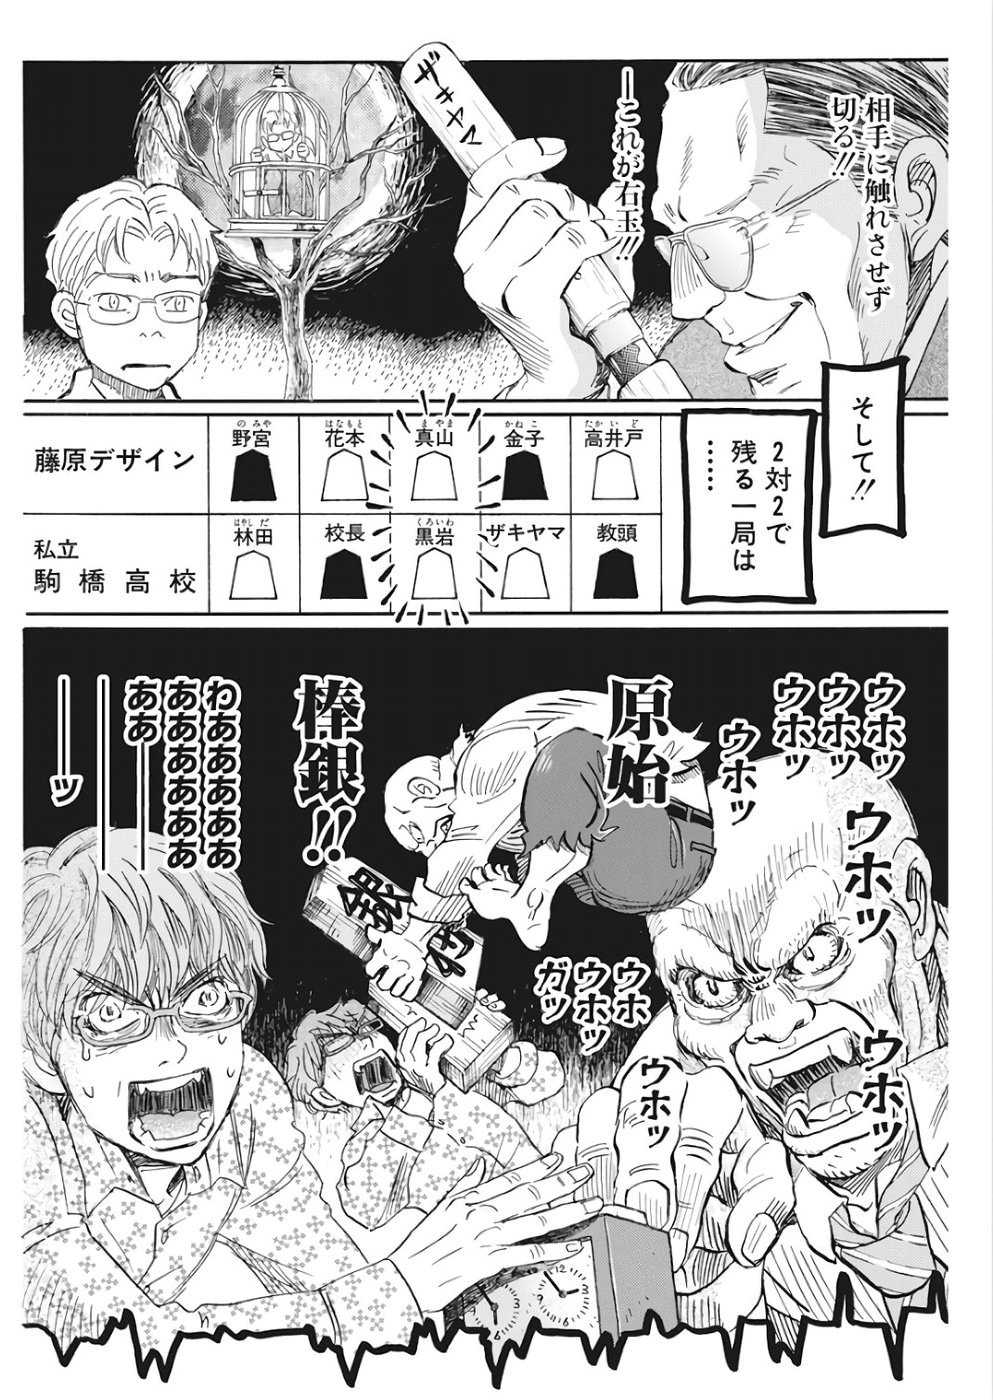 3 Gatsu no Lion - Chapter 151 - Page 4